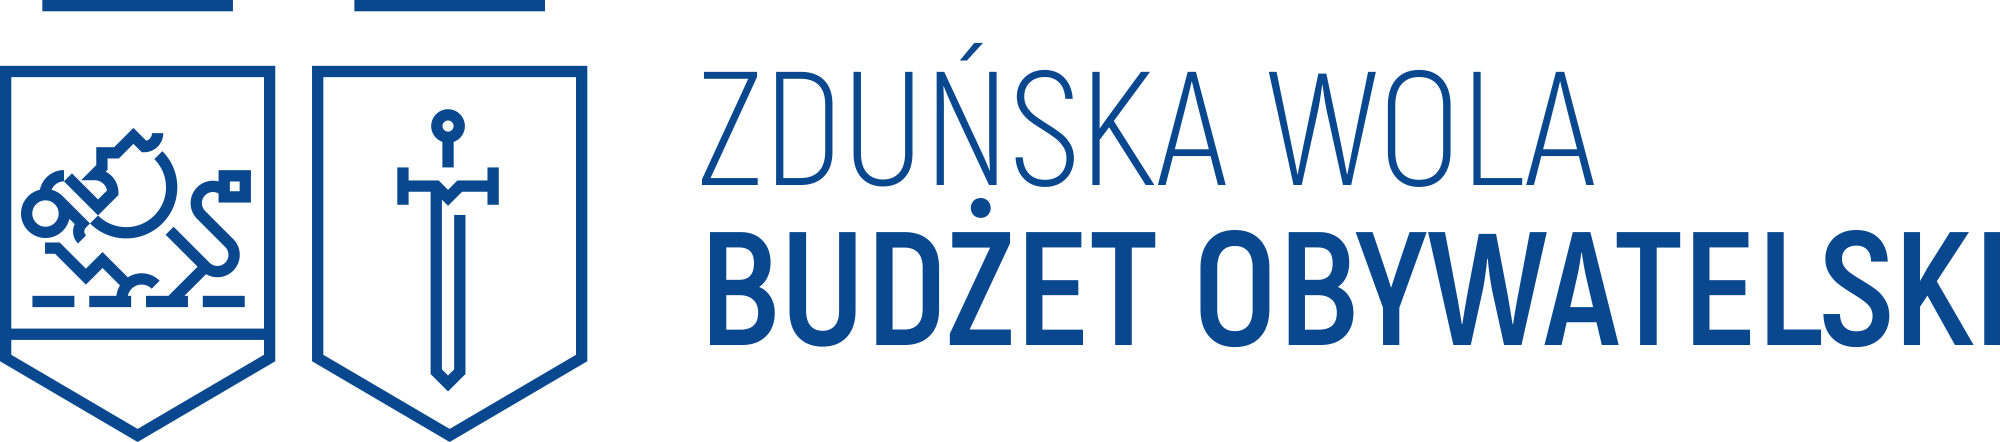 Budżet Obywatelski Miasta Zduńska Wola